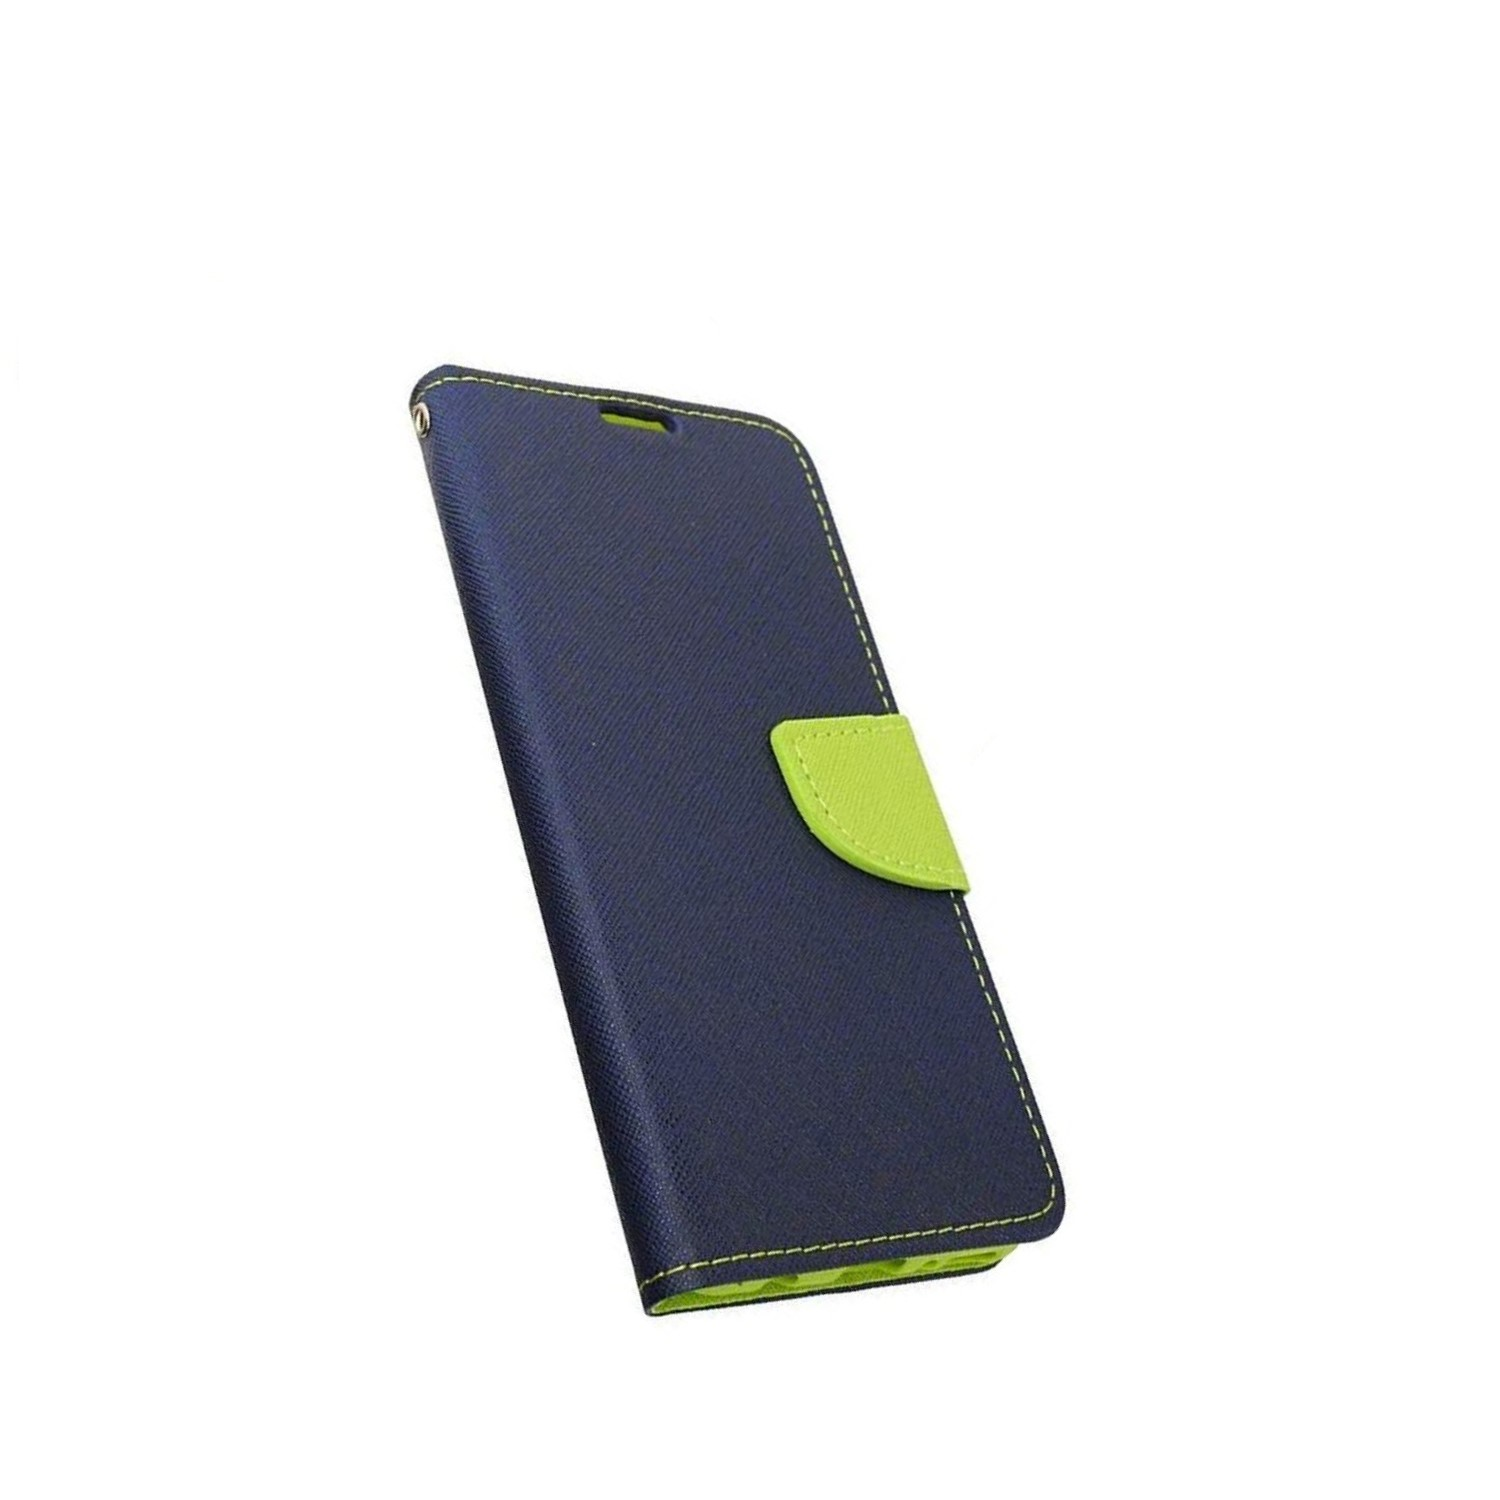 Pro, COFI 9H 13 Schutzglas, + Apple, Buch iPhone Blau-Grün Tasche Bookcover,